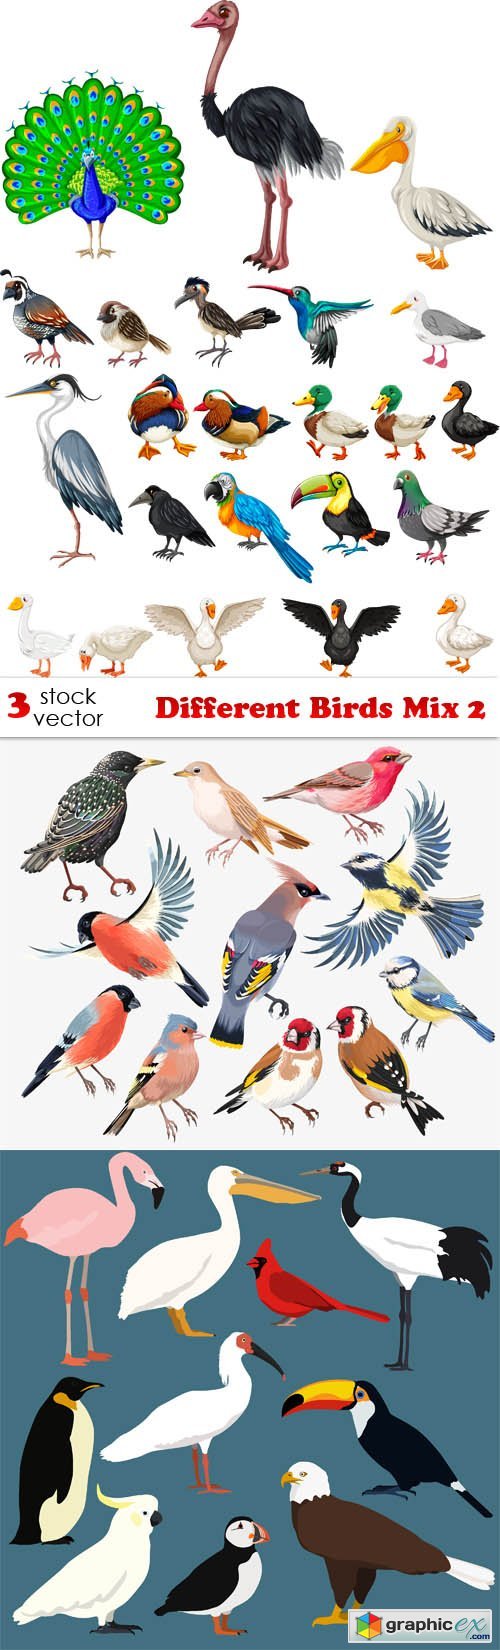 Different Birds Mix 2